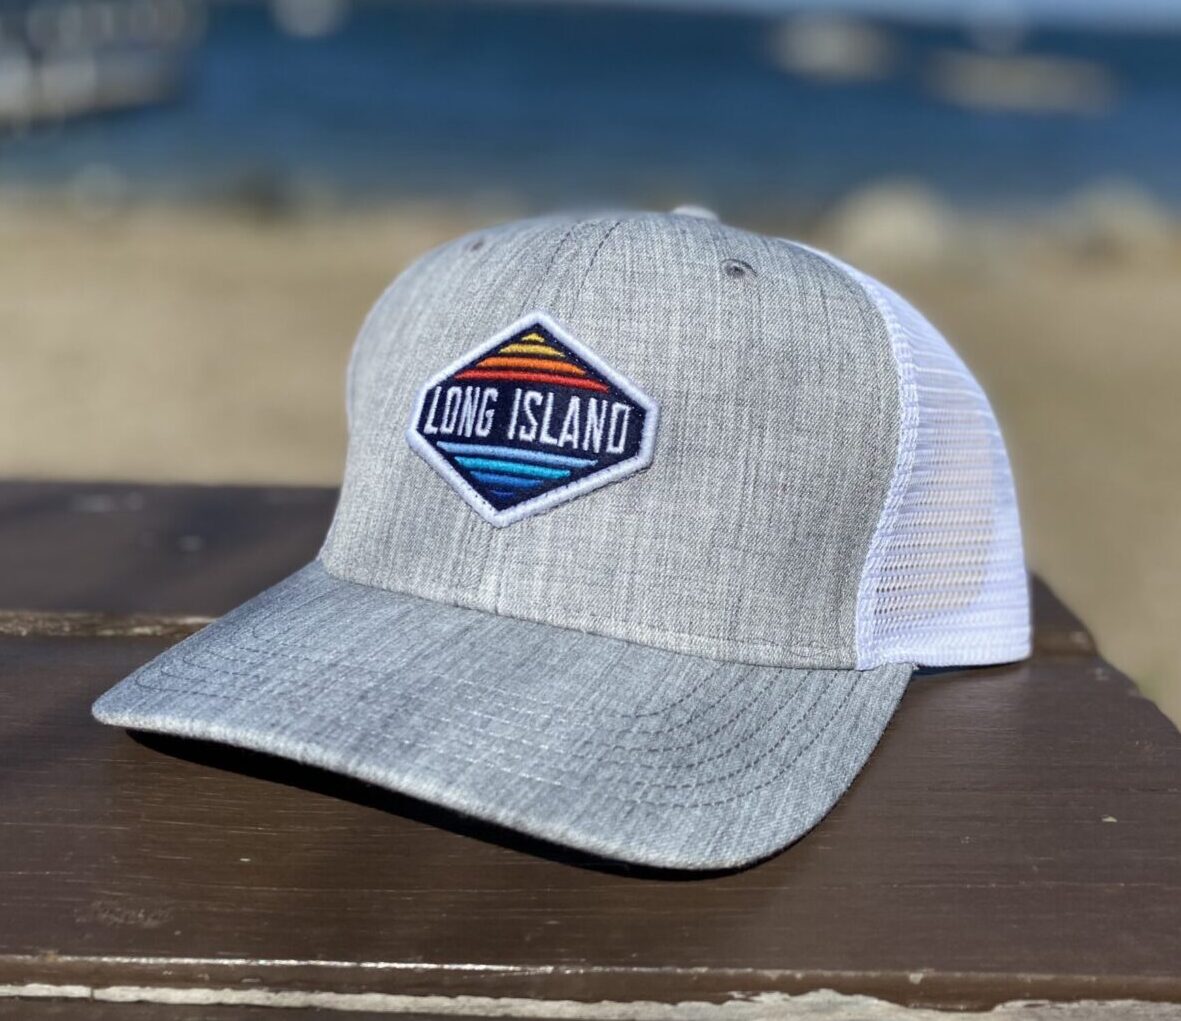 Long Island Striped Diamond Snapback Trucker Hat Grey